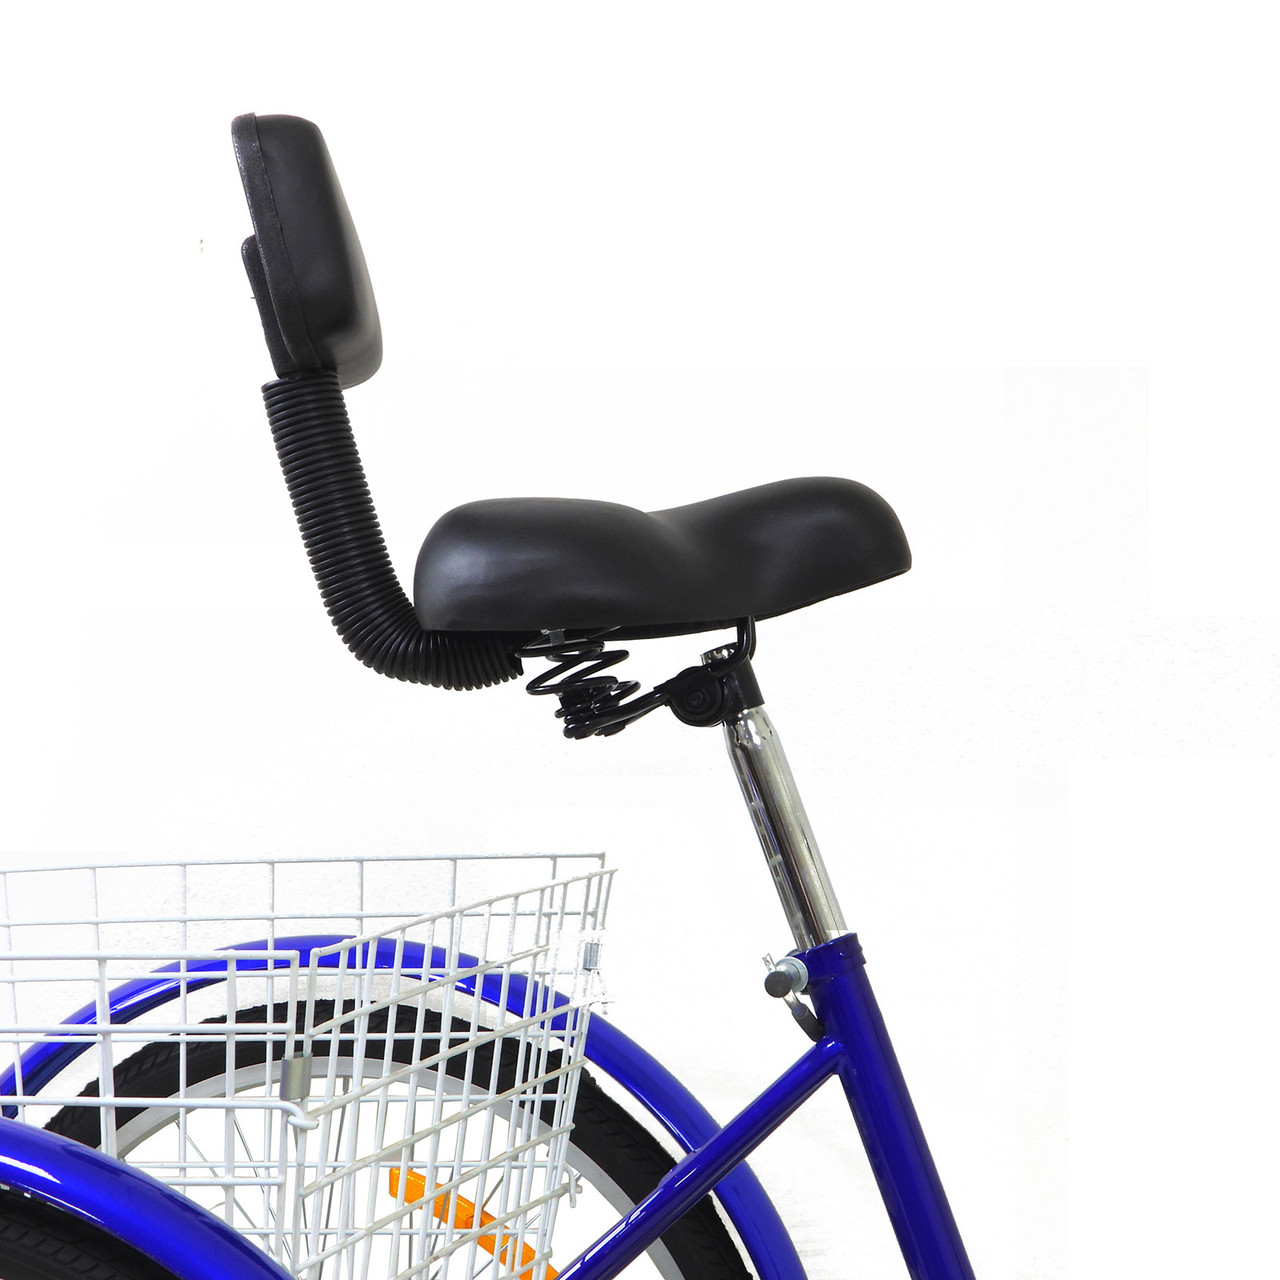 7 Speed 24" Adult 3-Wheel Tricycle Cruise Bike Bicycle With Basket (Pump + Lock) Blue